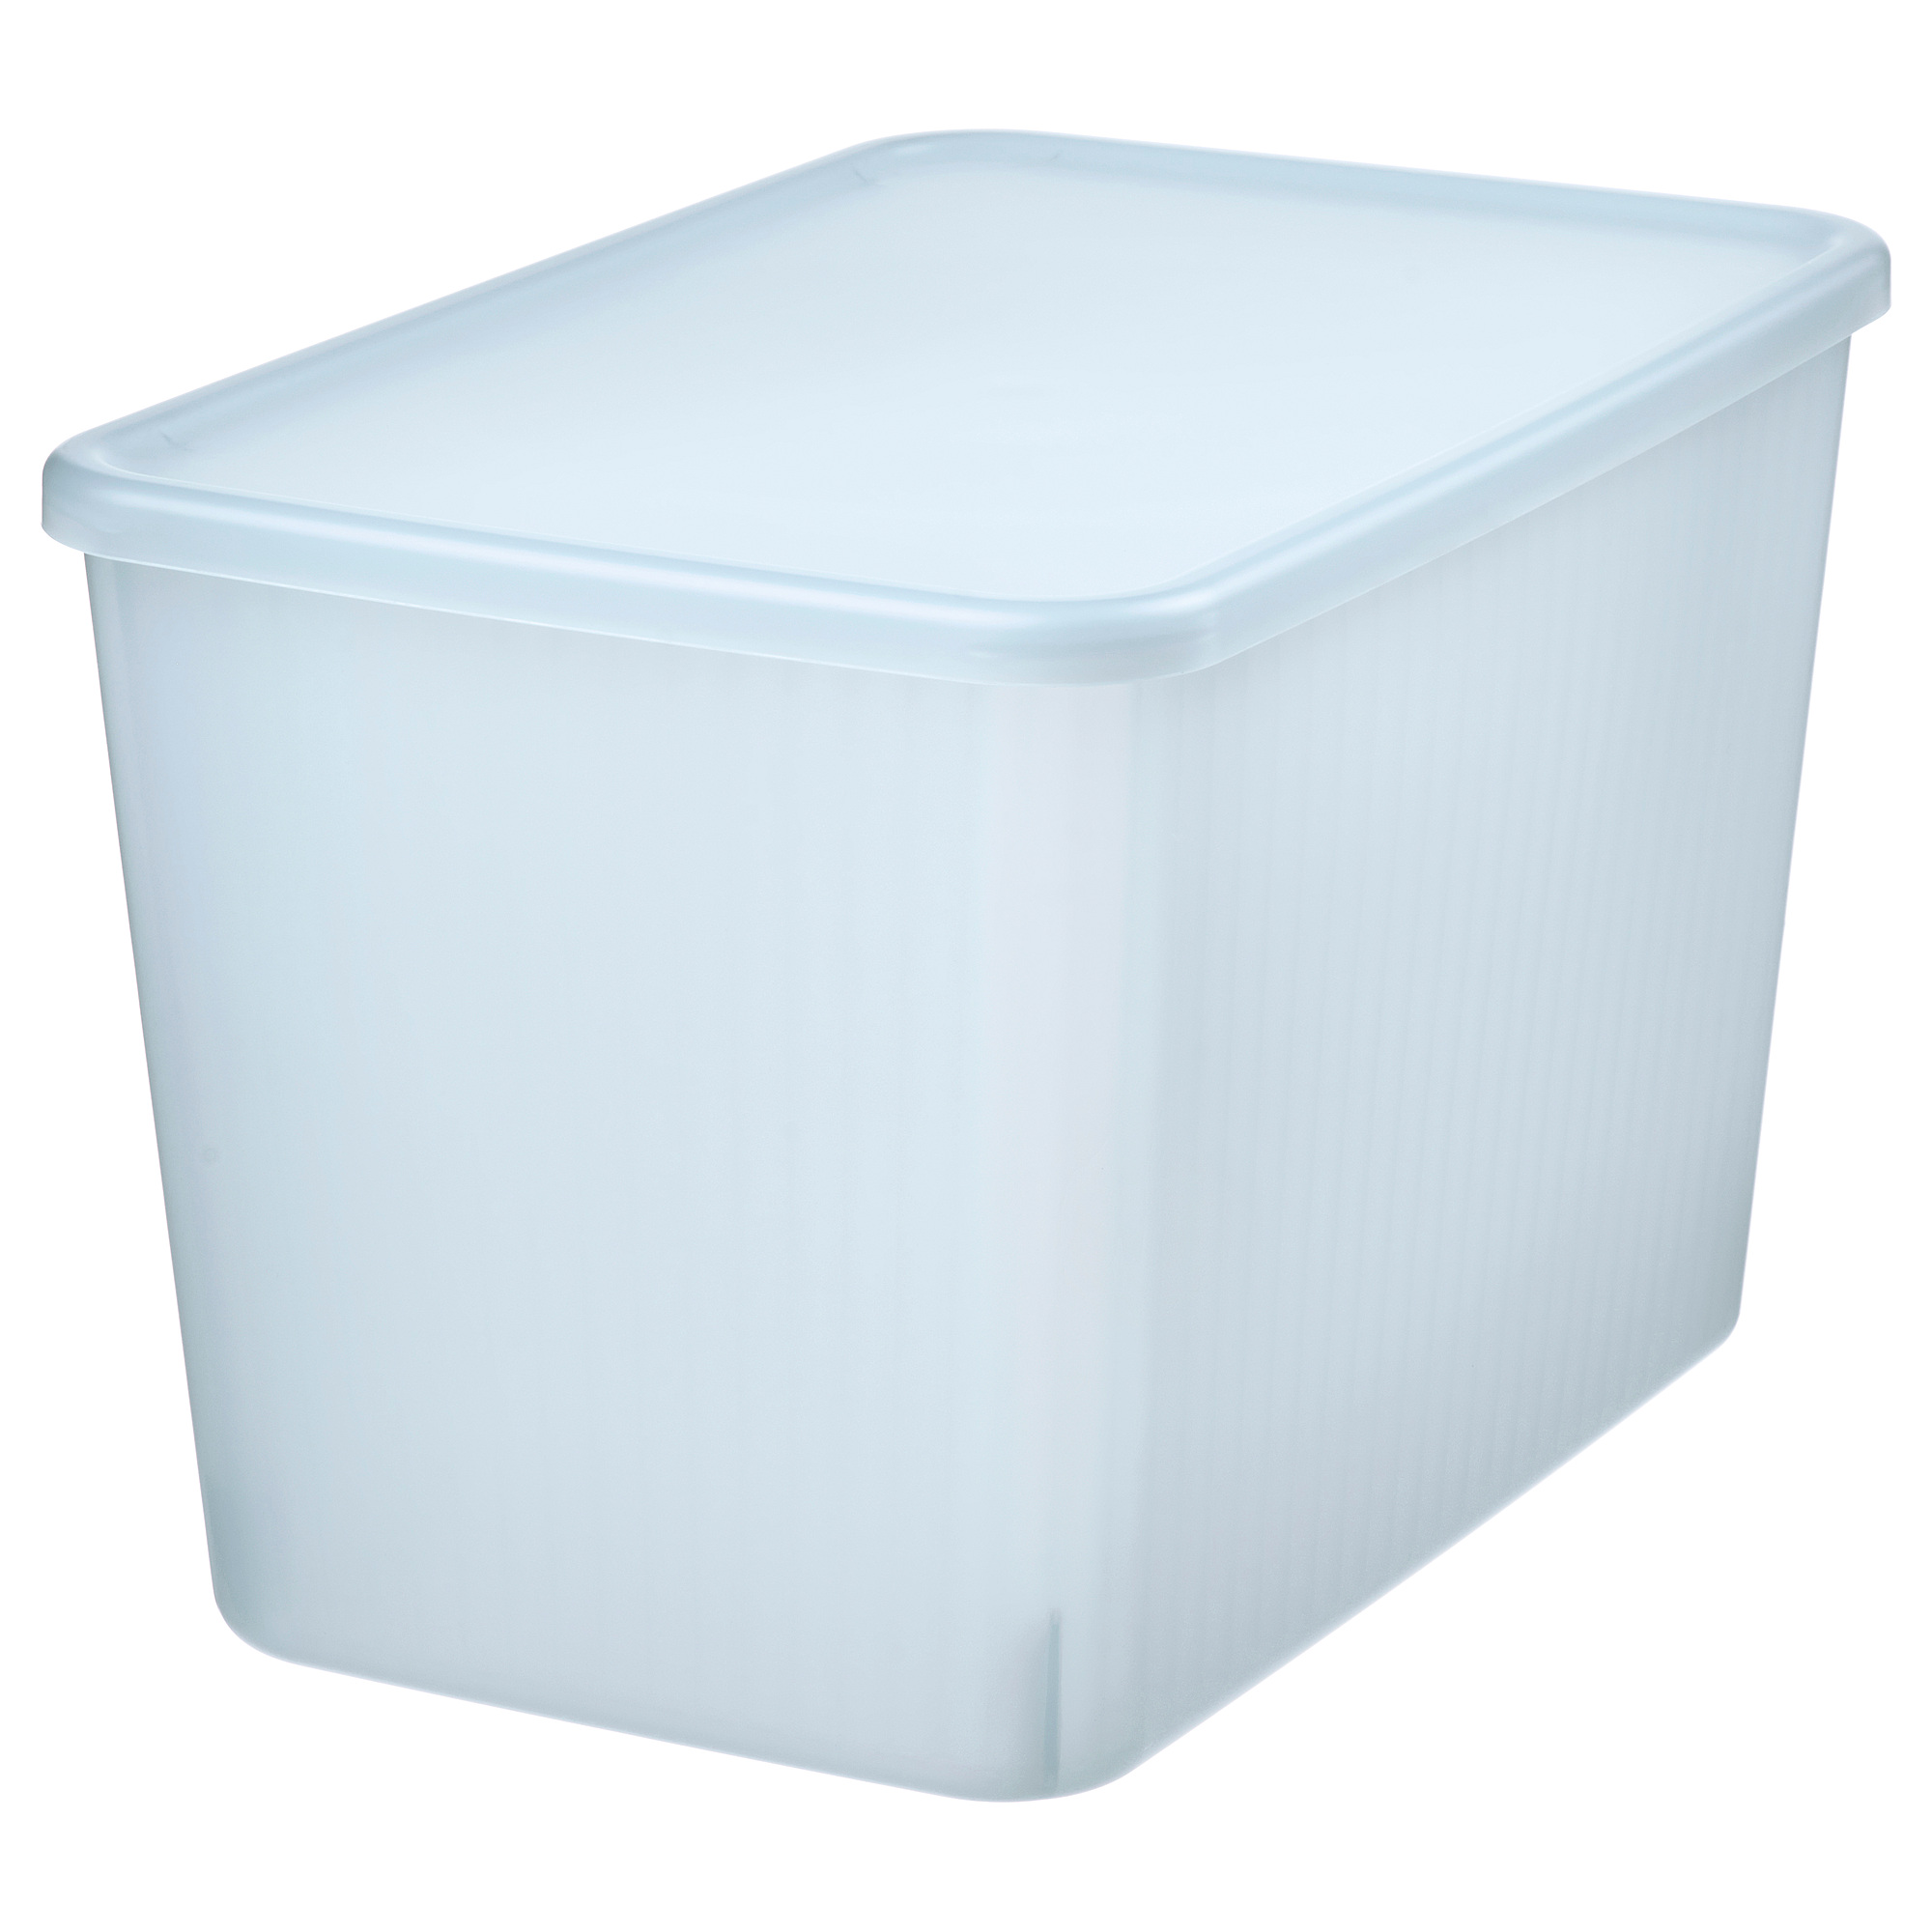 RYKTA - 連蓋貯物盒, 透明, 24x36x23 厘米/14.5 升| IKEA 香港及澳門